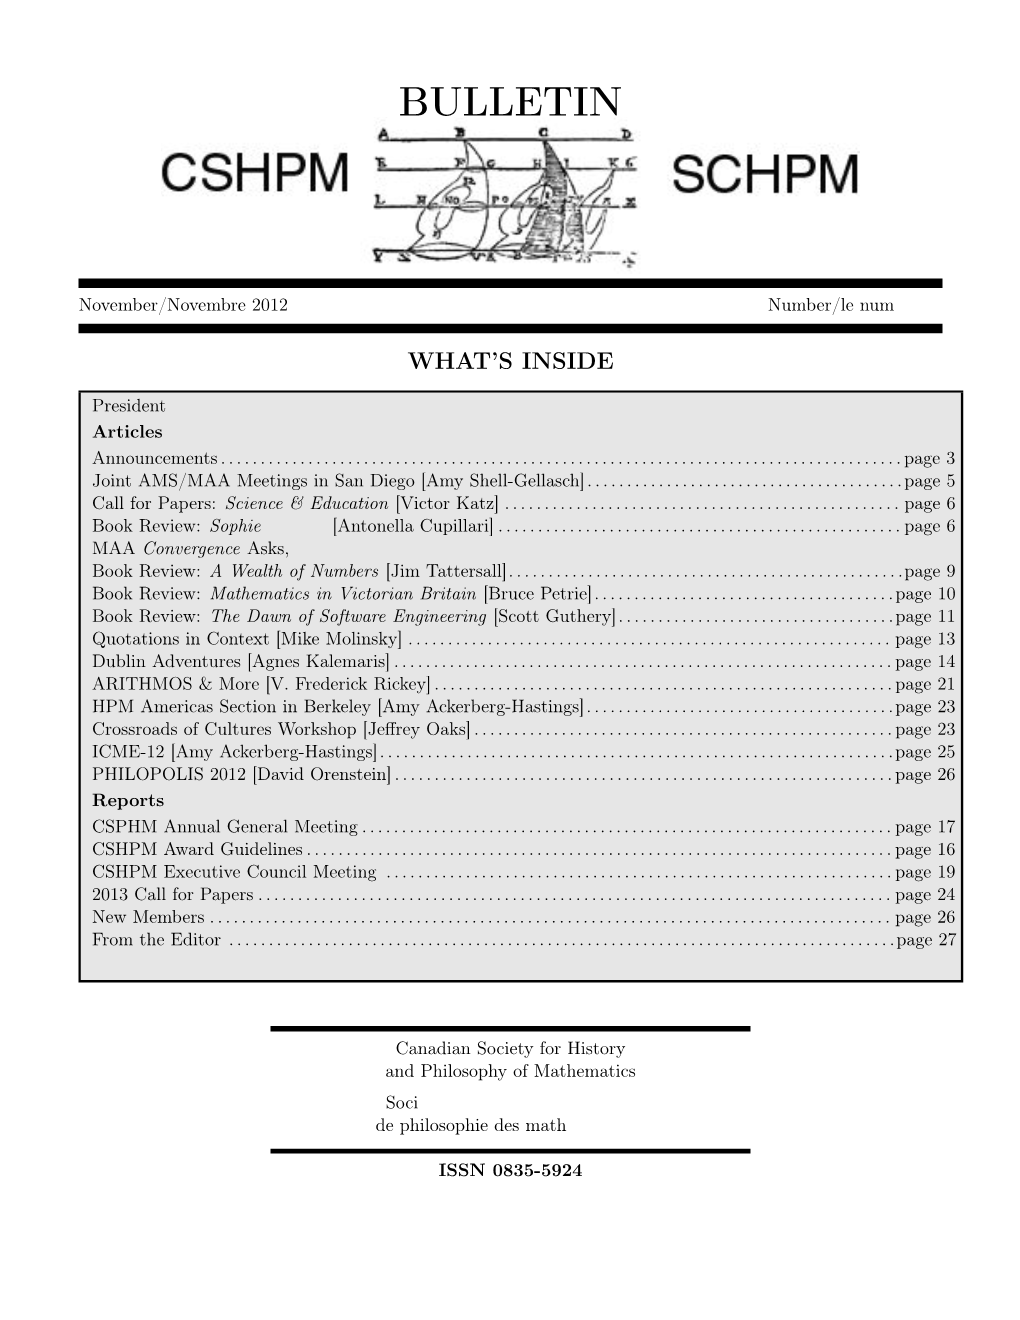 CSHPM Bulletin, November 2012